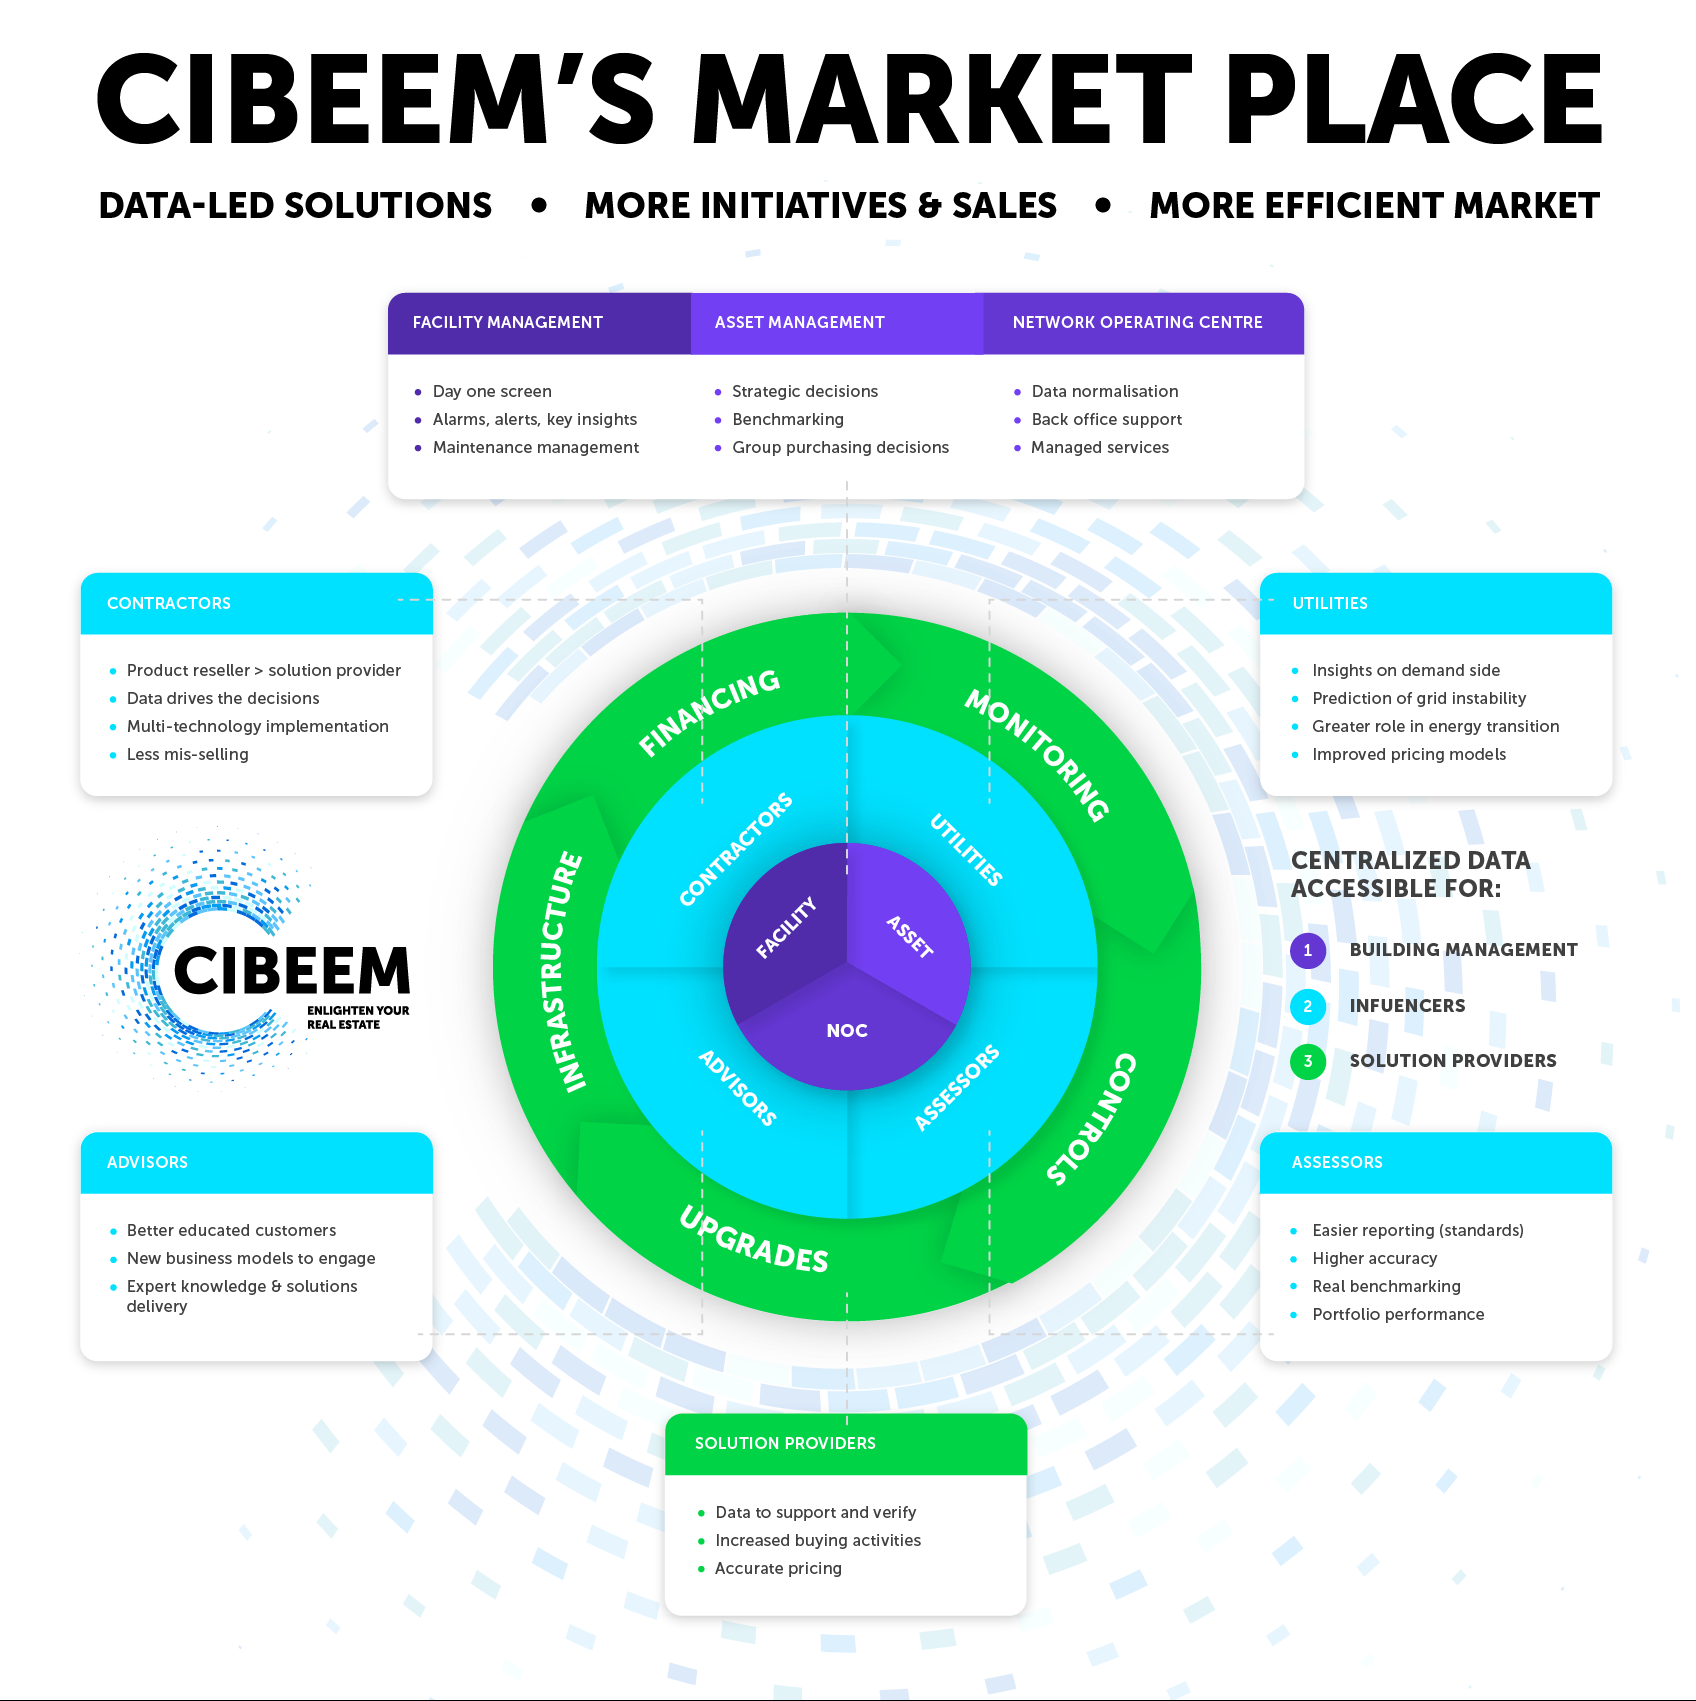 Cibeem visualisation